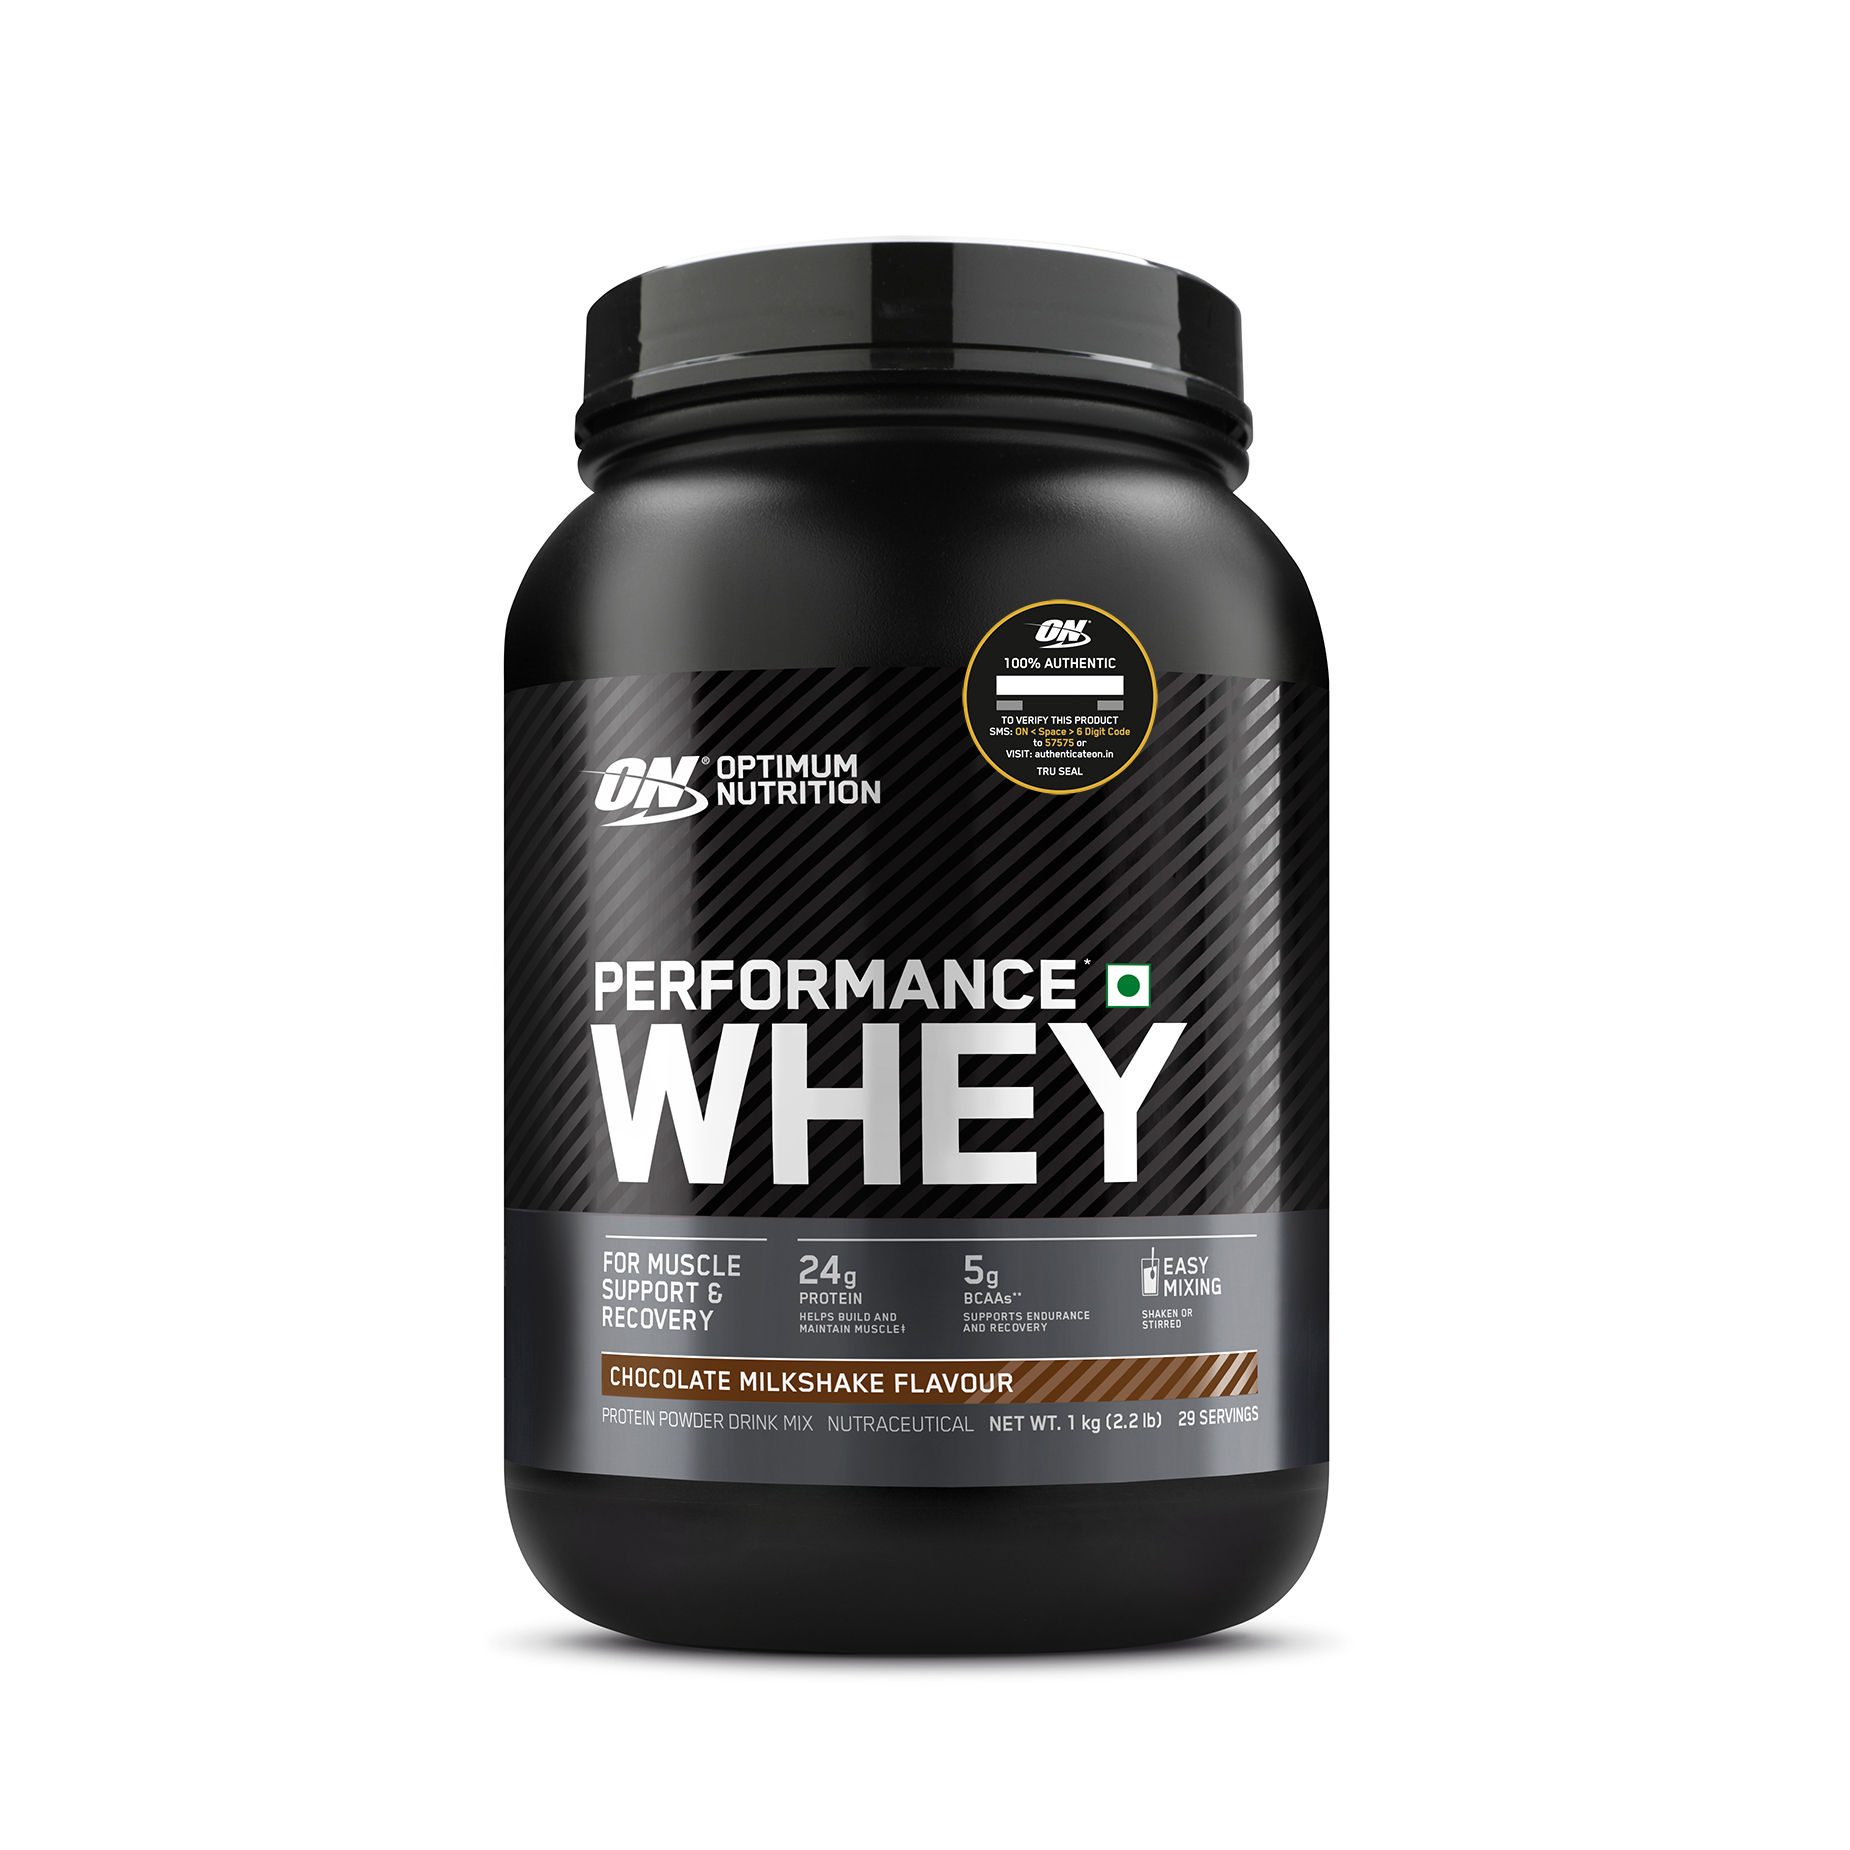 Optimum Nutrition Performance Whey Protein Powder, 24g Protein, 5g BCAA - Chocolate Milkshake